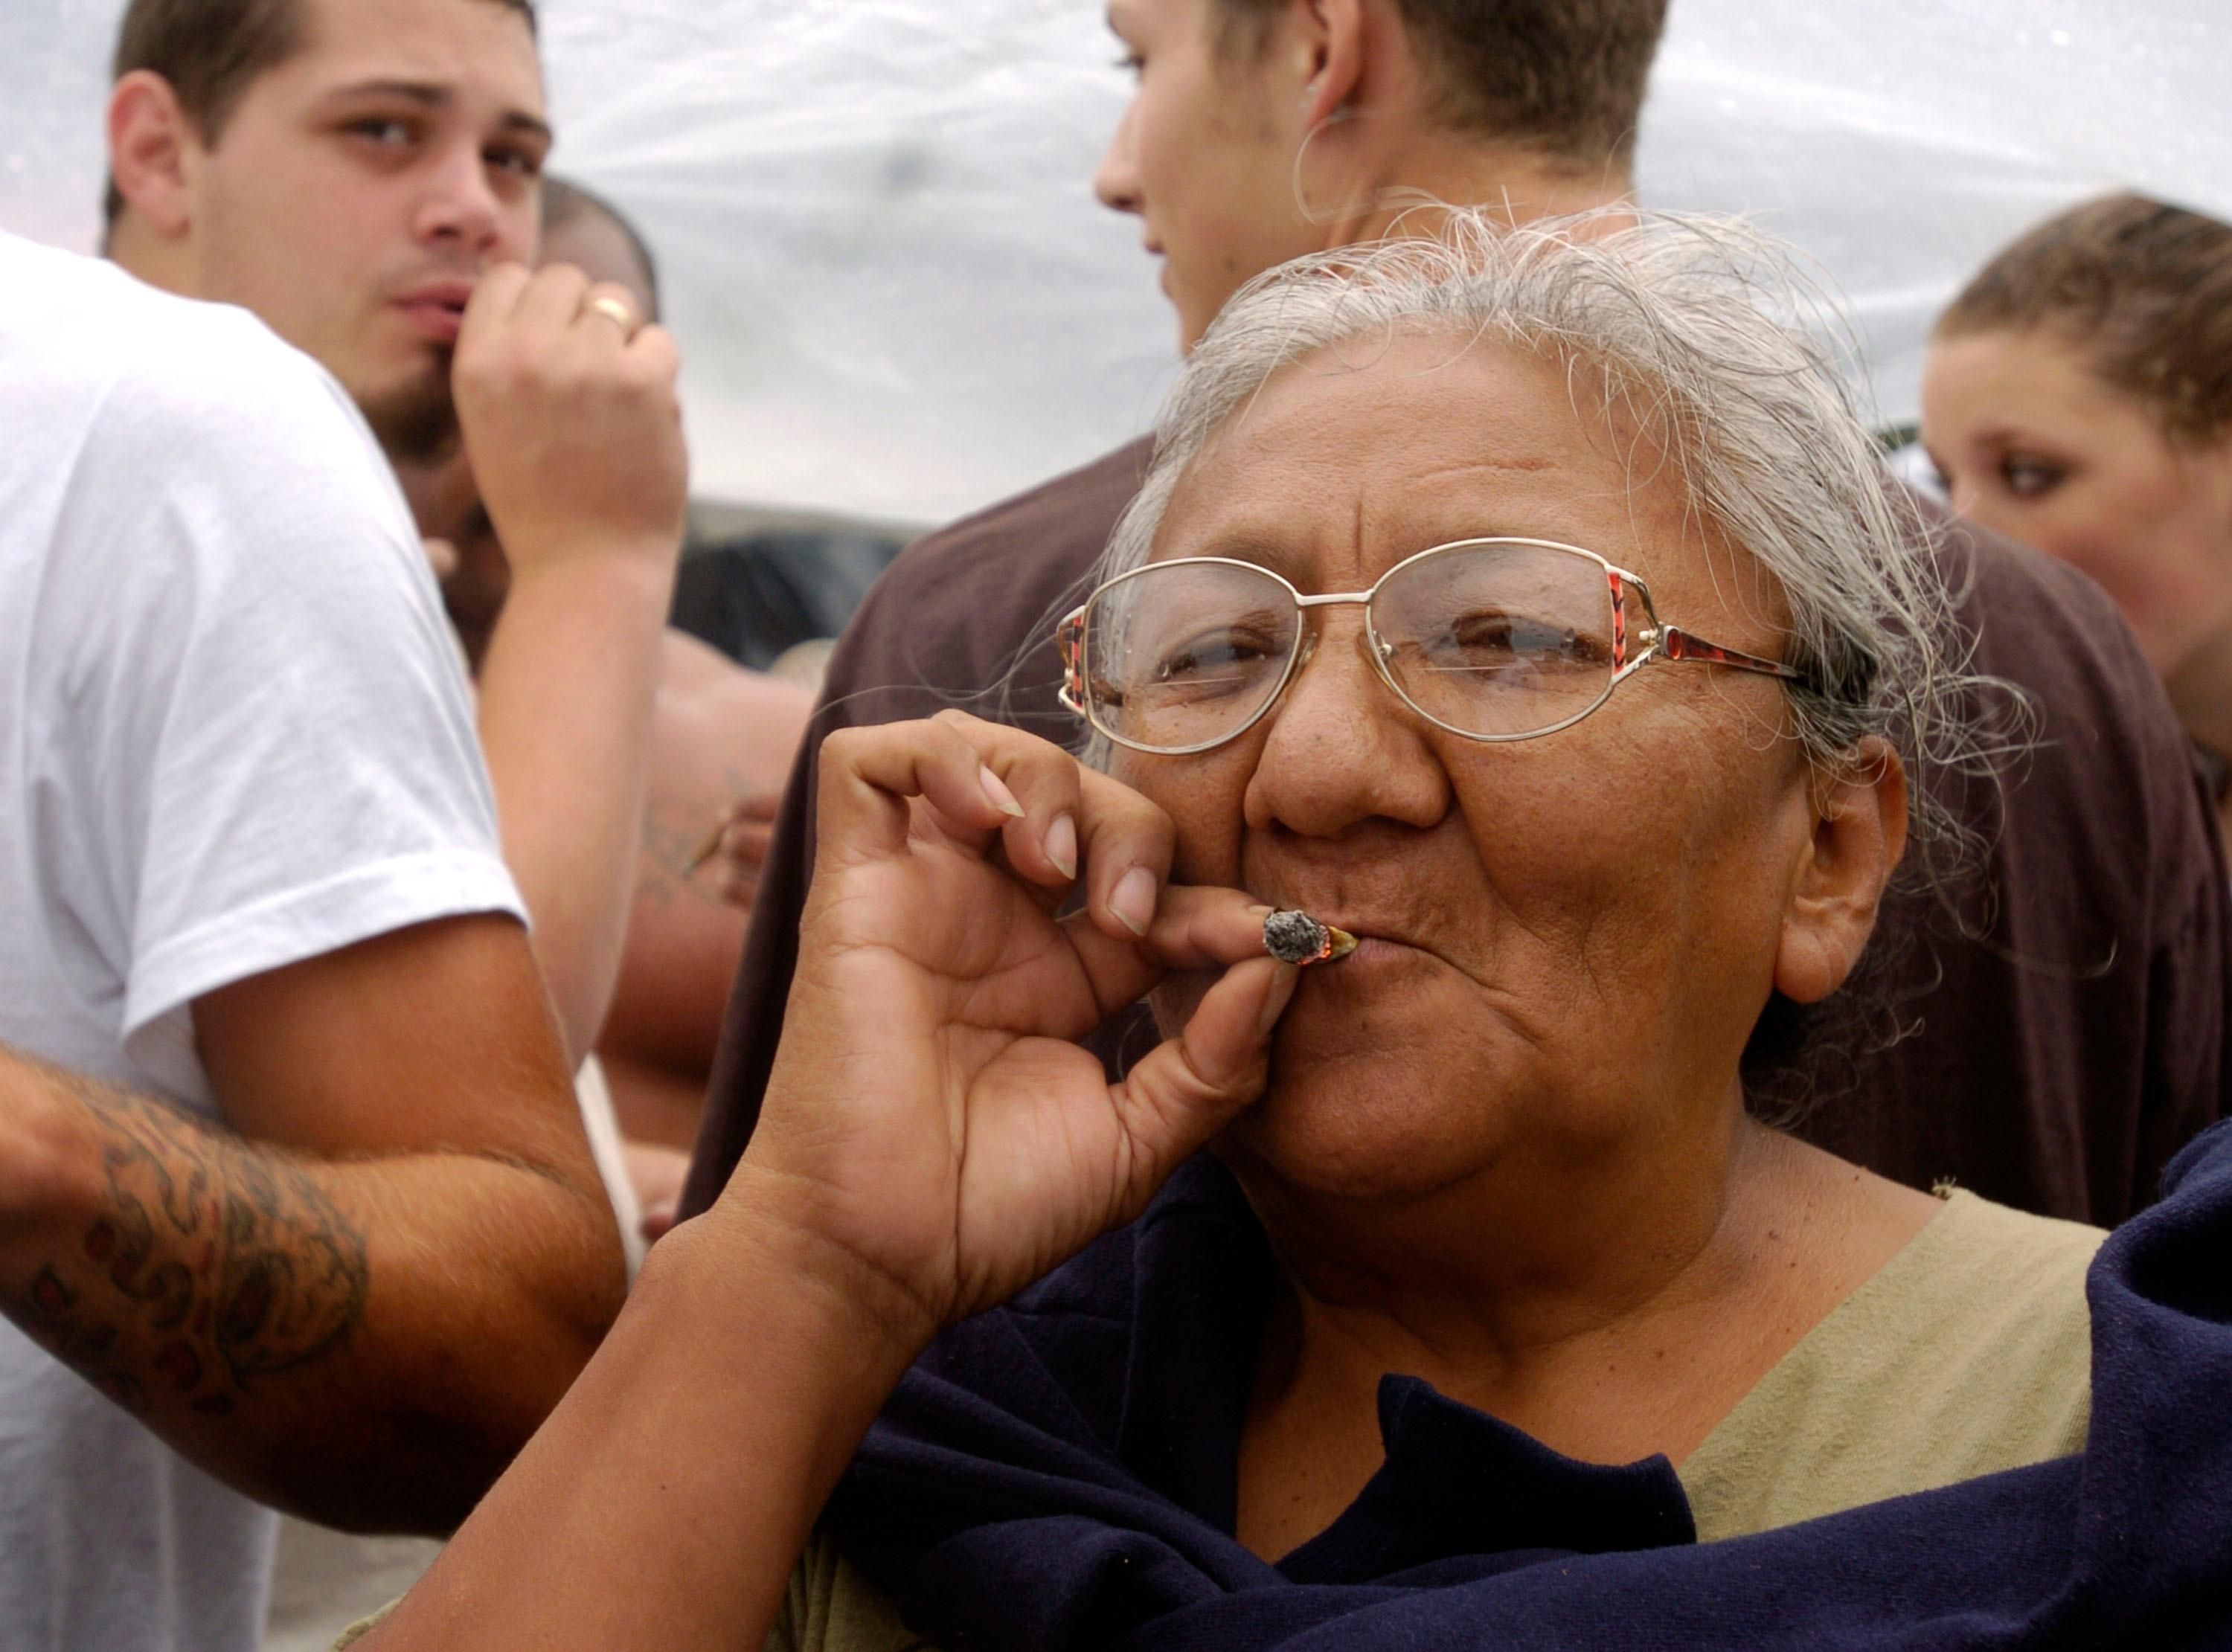 A woman smokes marijuana